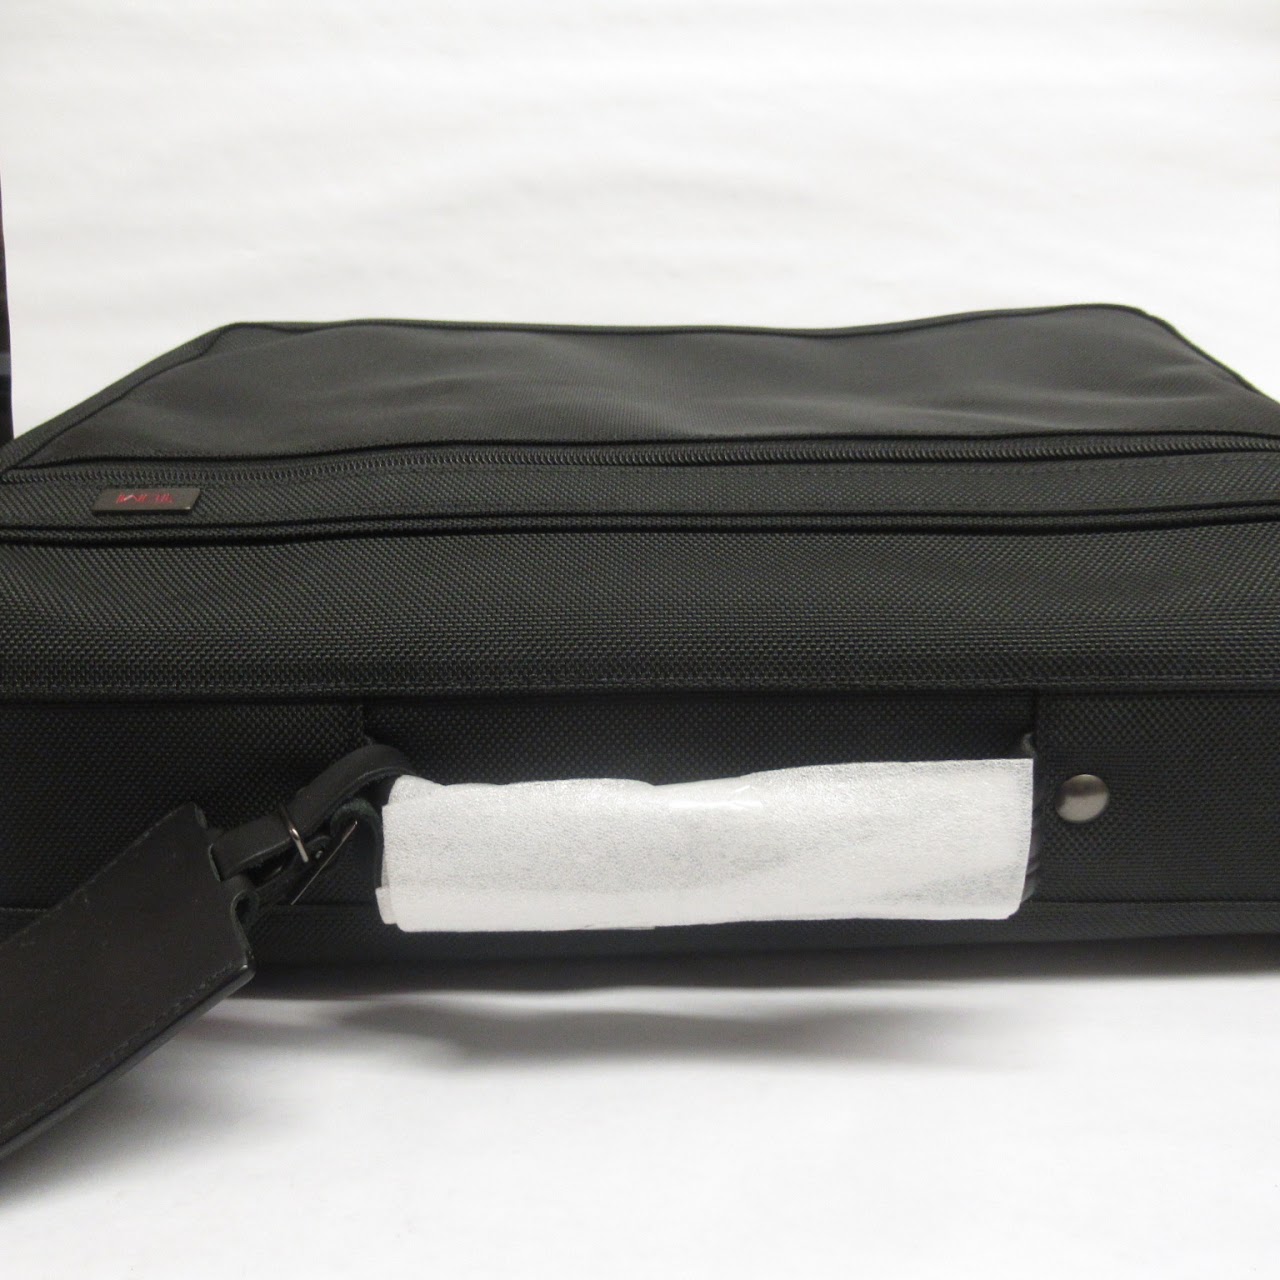 Tumi MINT Carry-On Travel Bag